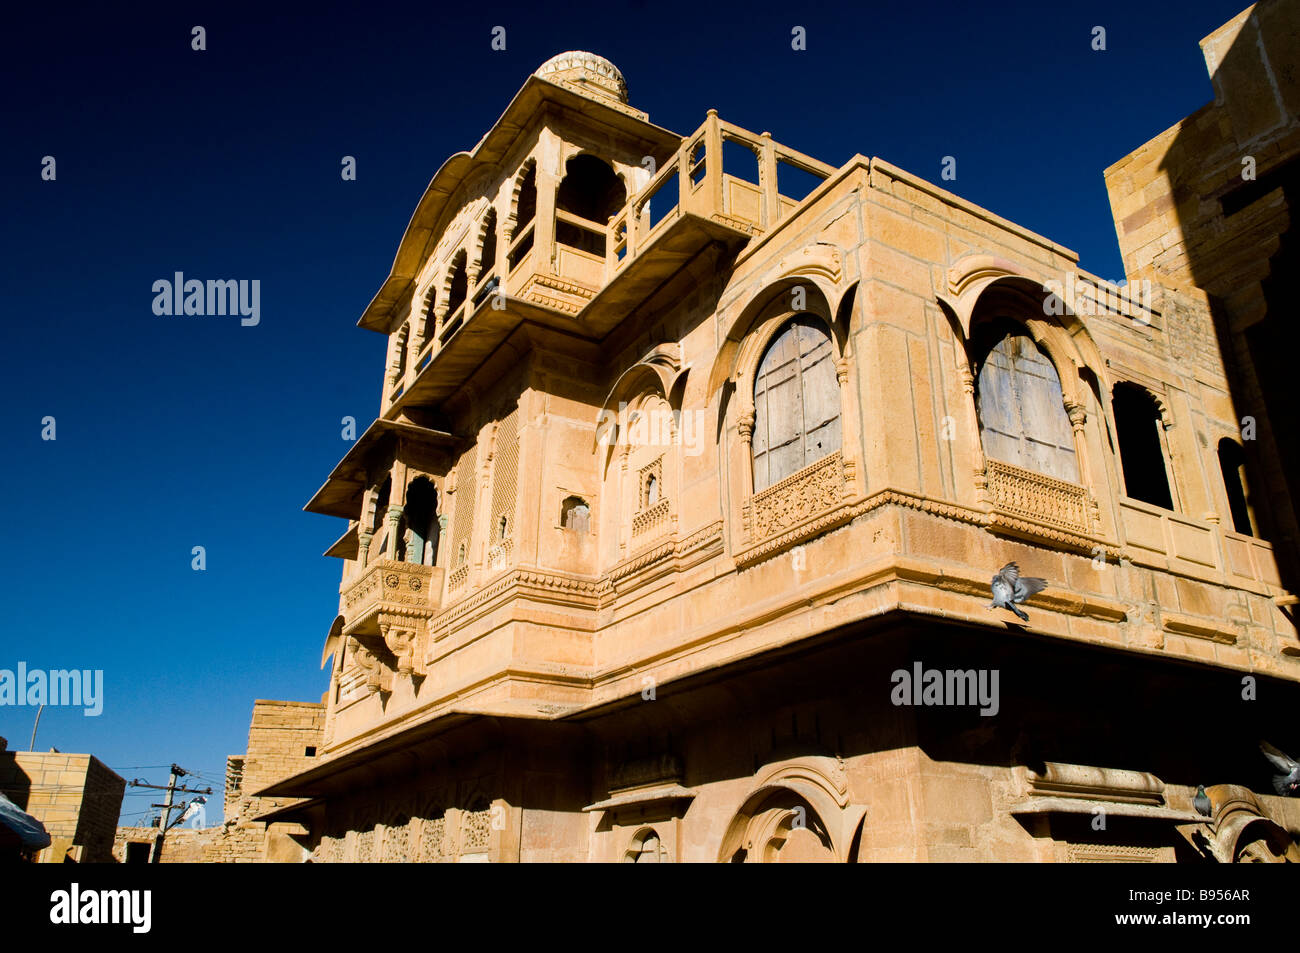 Jaisalmer Fort Of Rajasthan, India - WorldAtlas